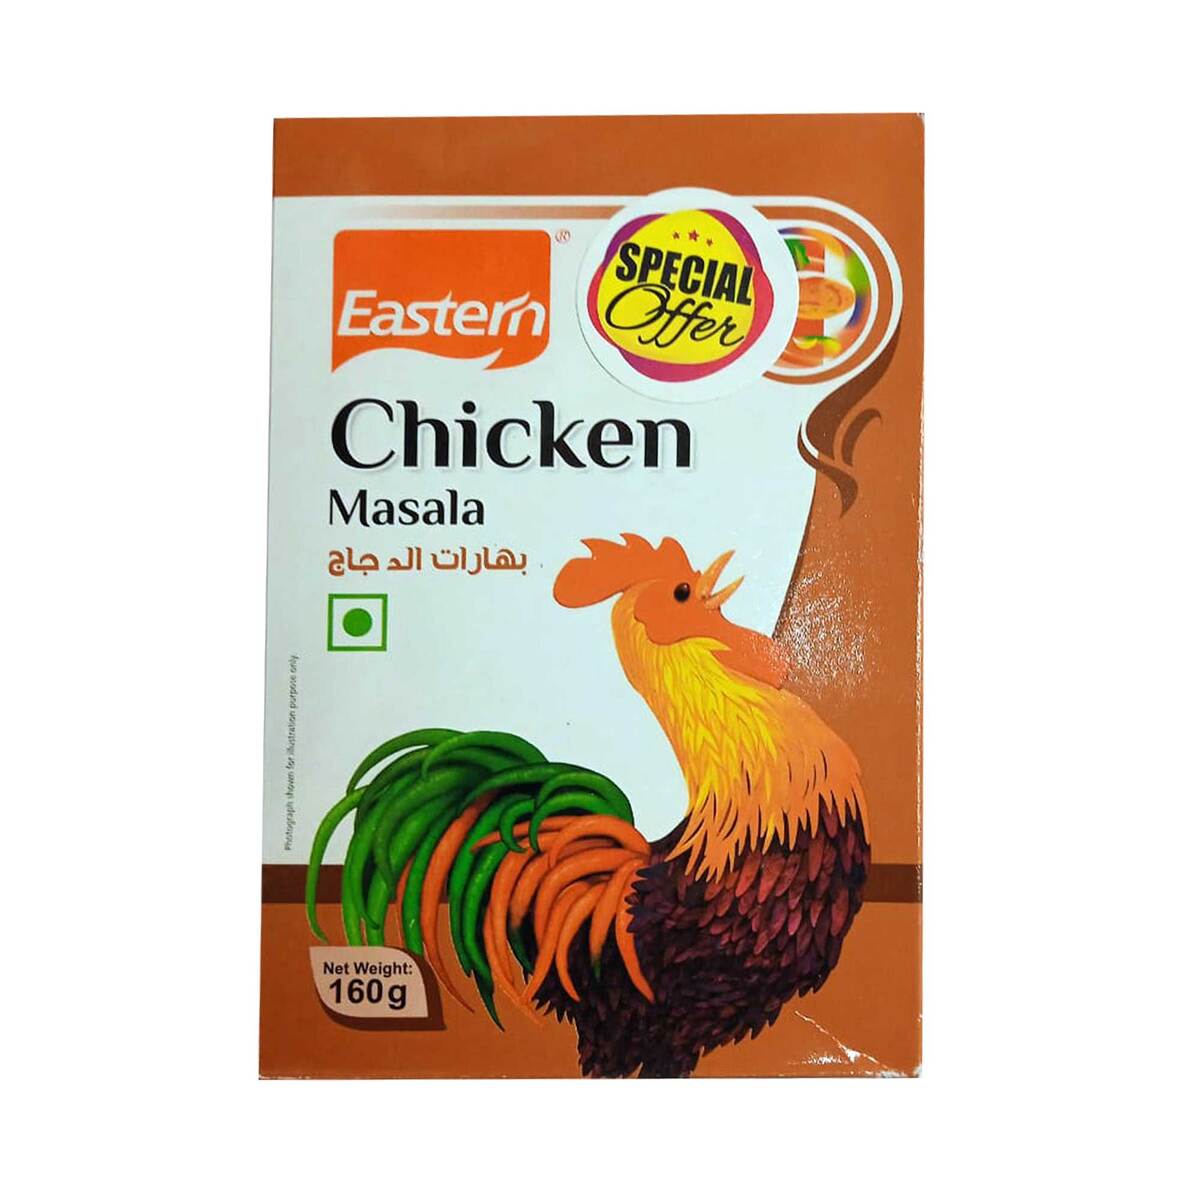 Eastern Chicken Masala Value Pack 160g